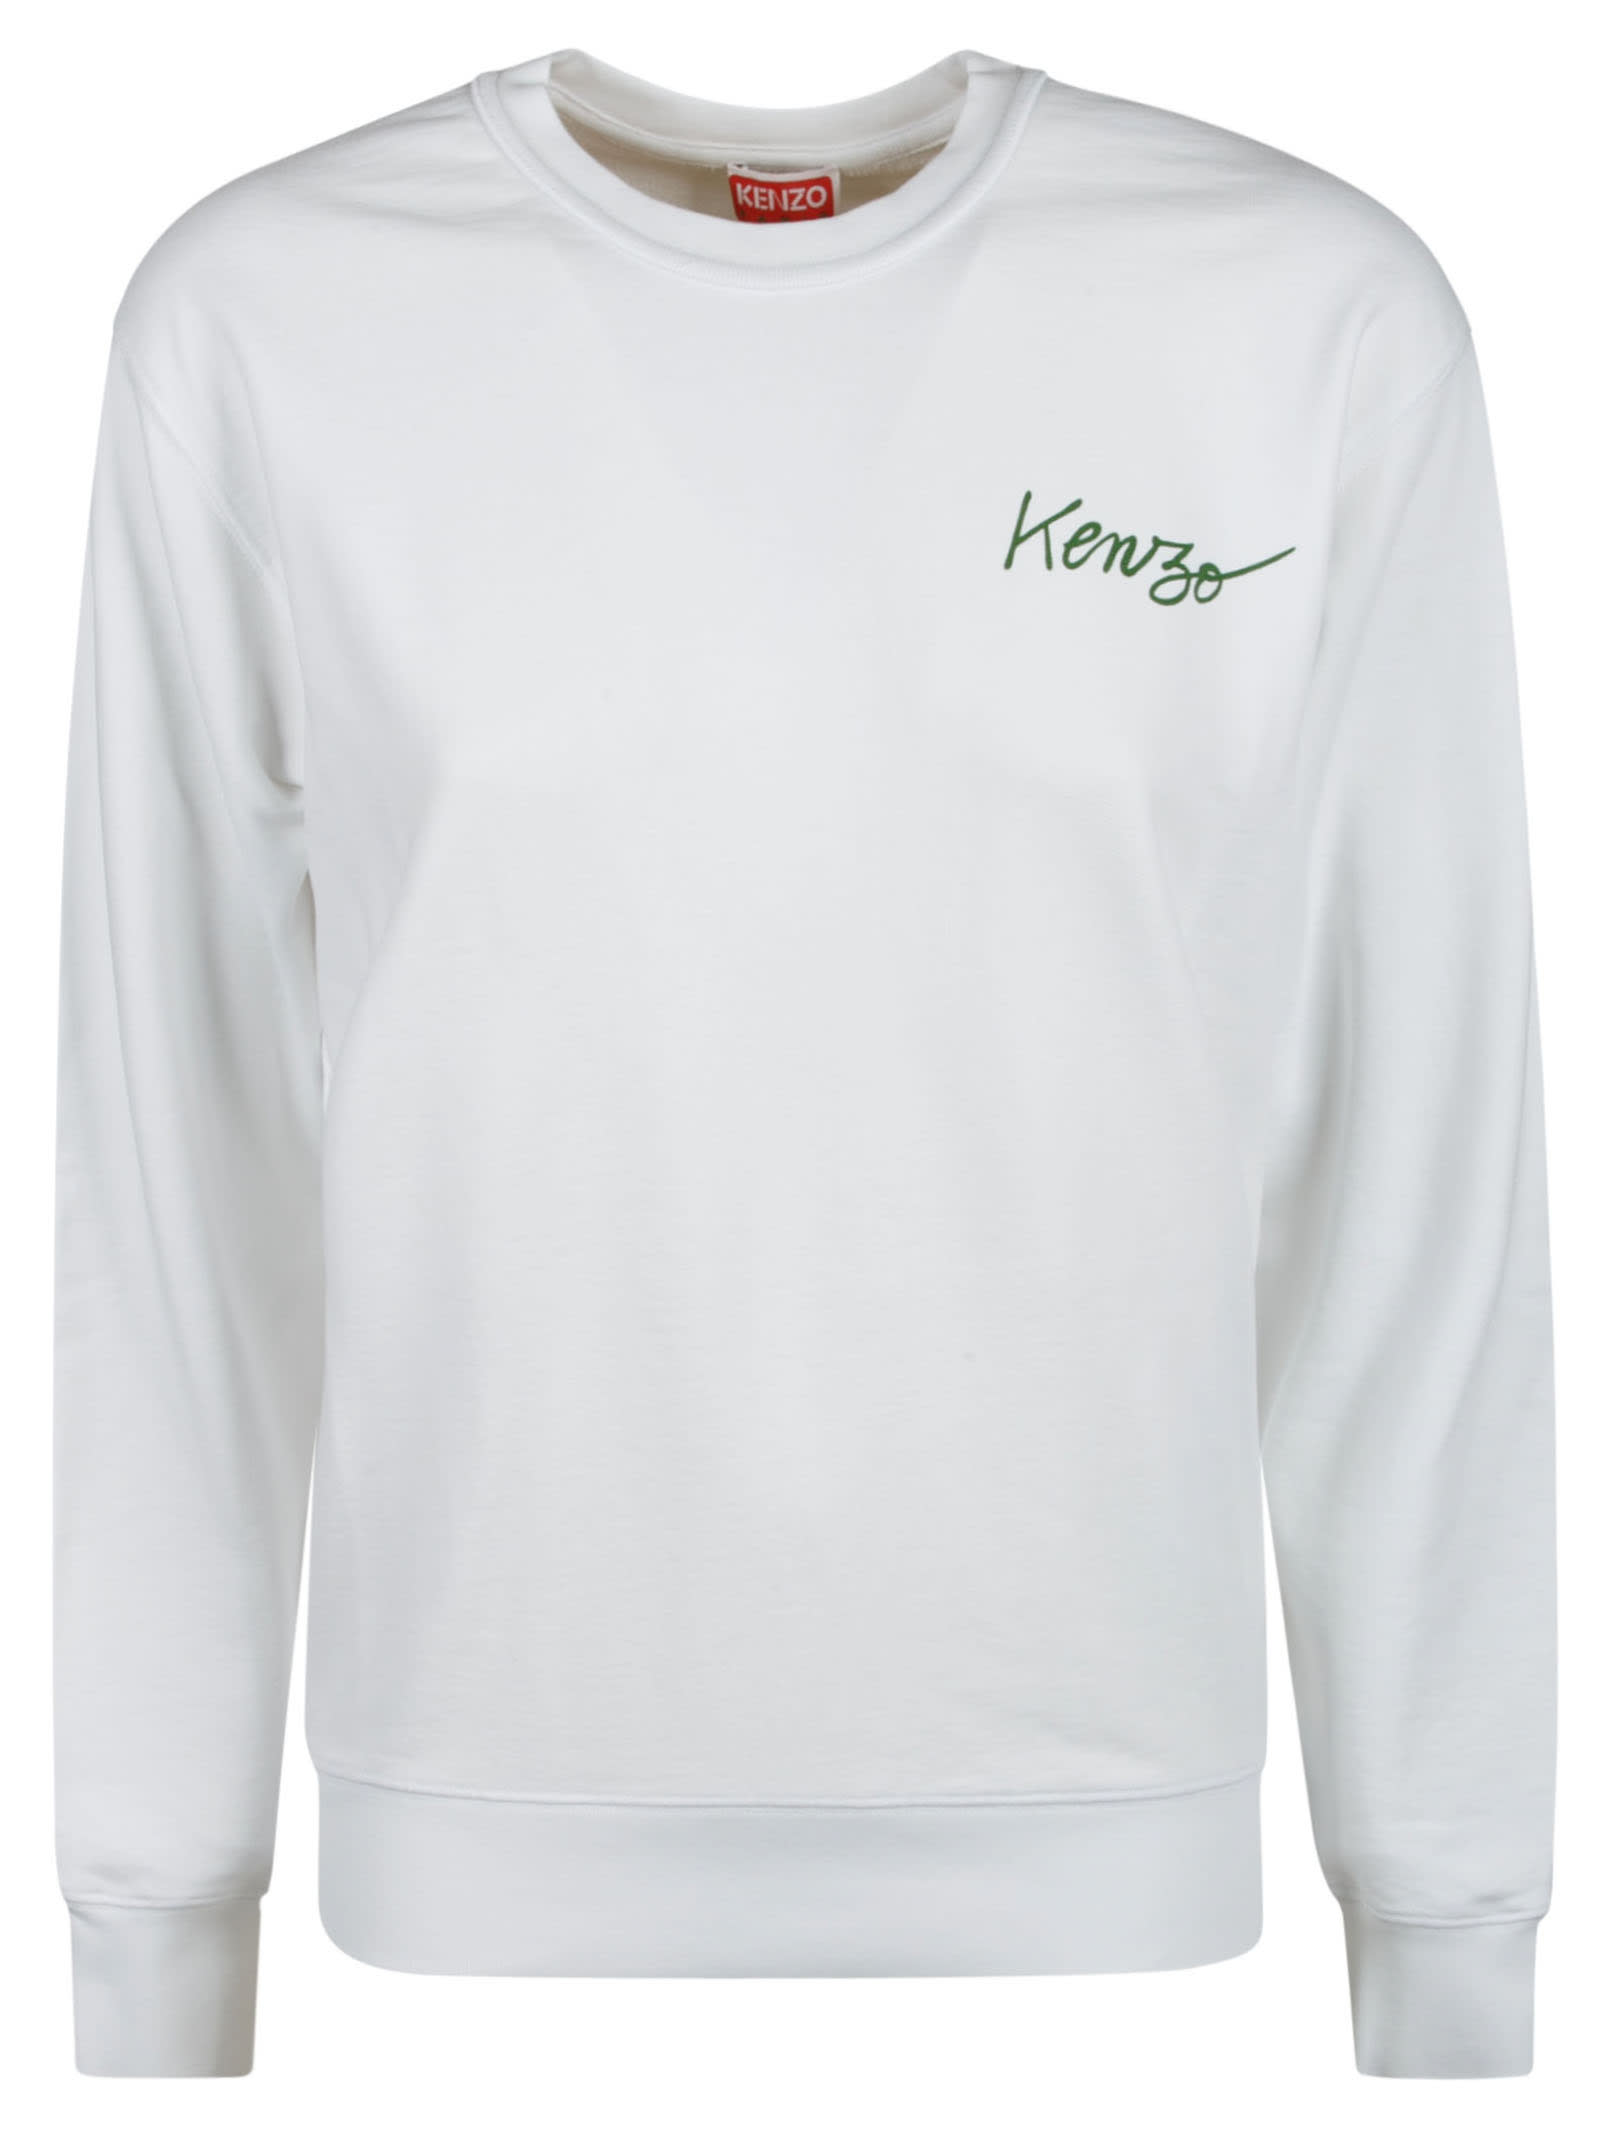 Kenzo Graphic Classic Sweatshirt